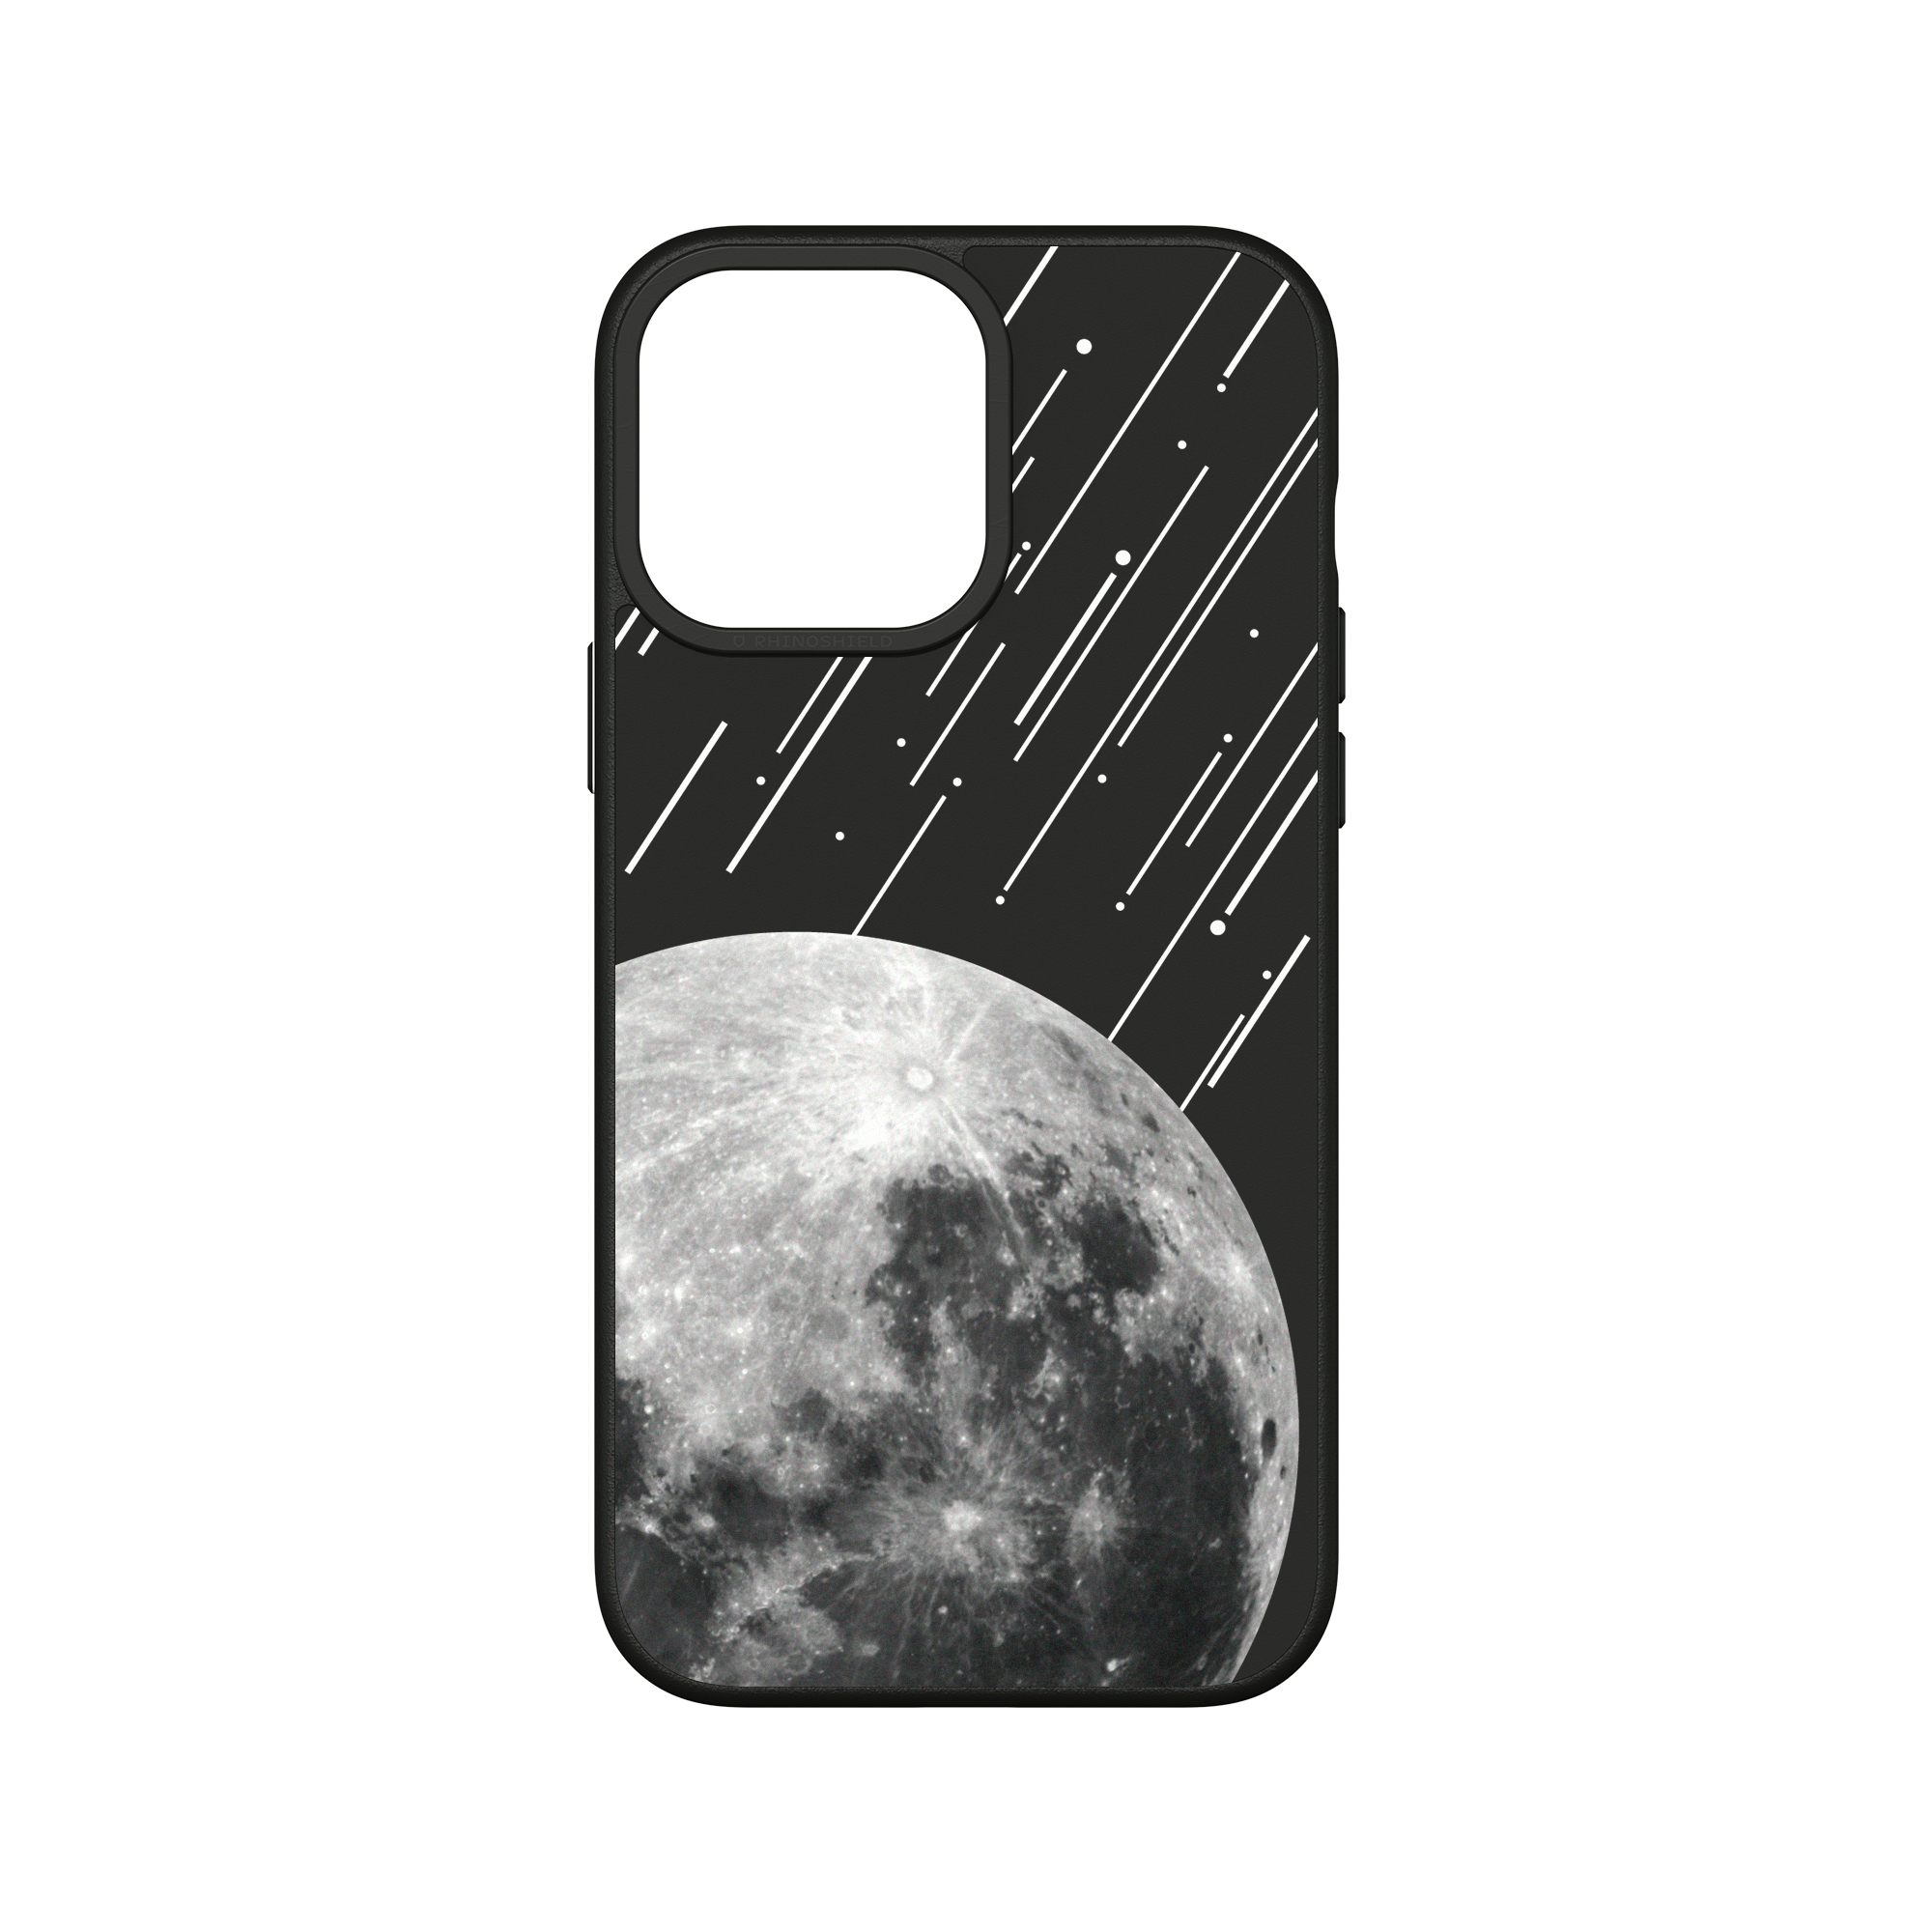 Funda RhinoShield Mod NX para iPhone 13 Pro - Color Negro » FIXTORE